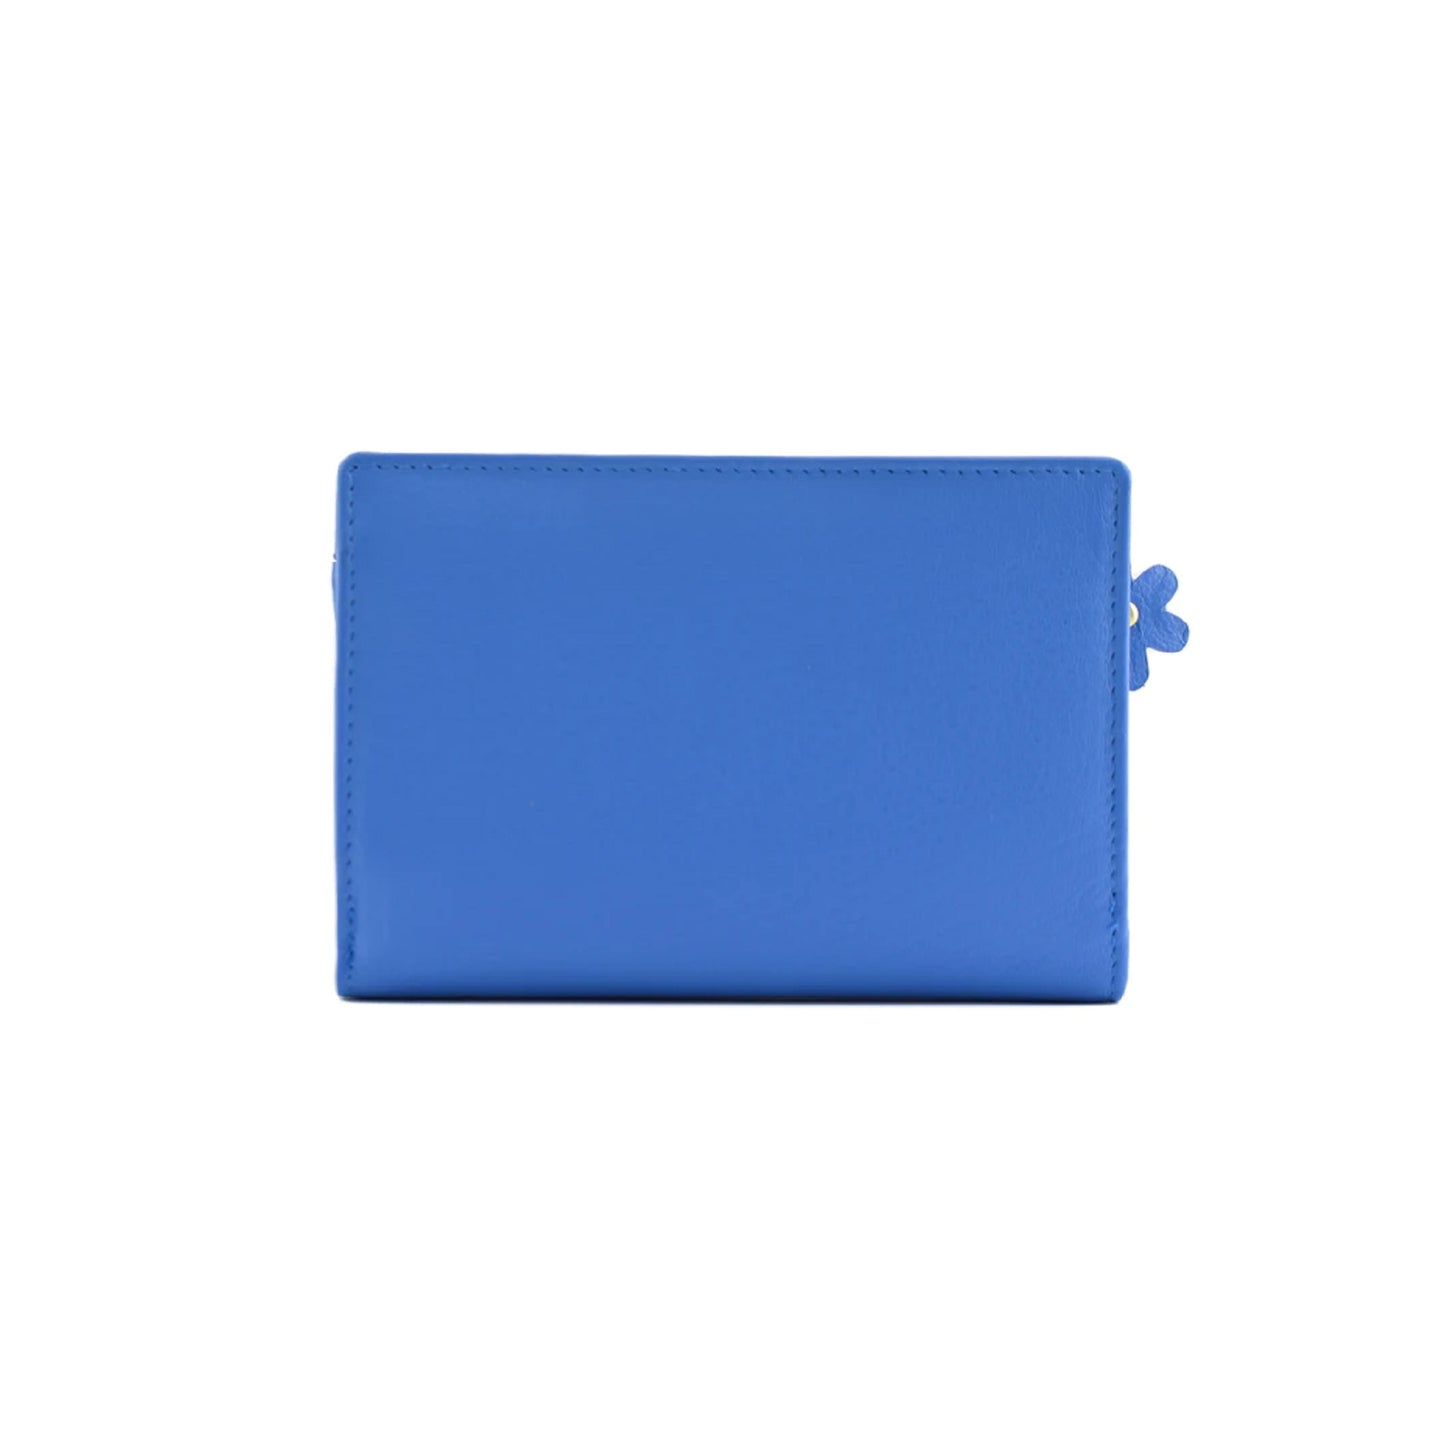 Shiloh Large Tri Fold Leather Purse - Blue